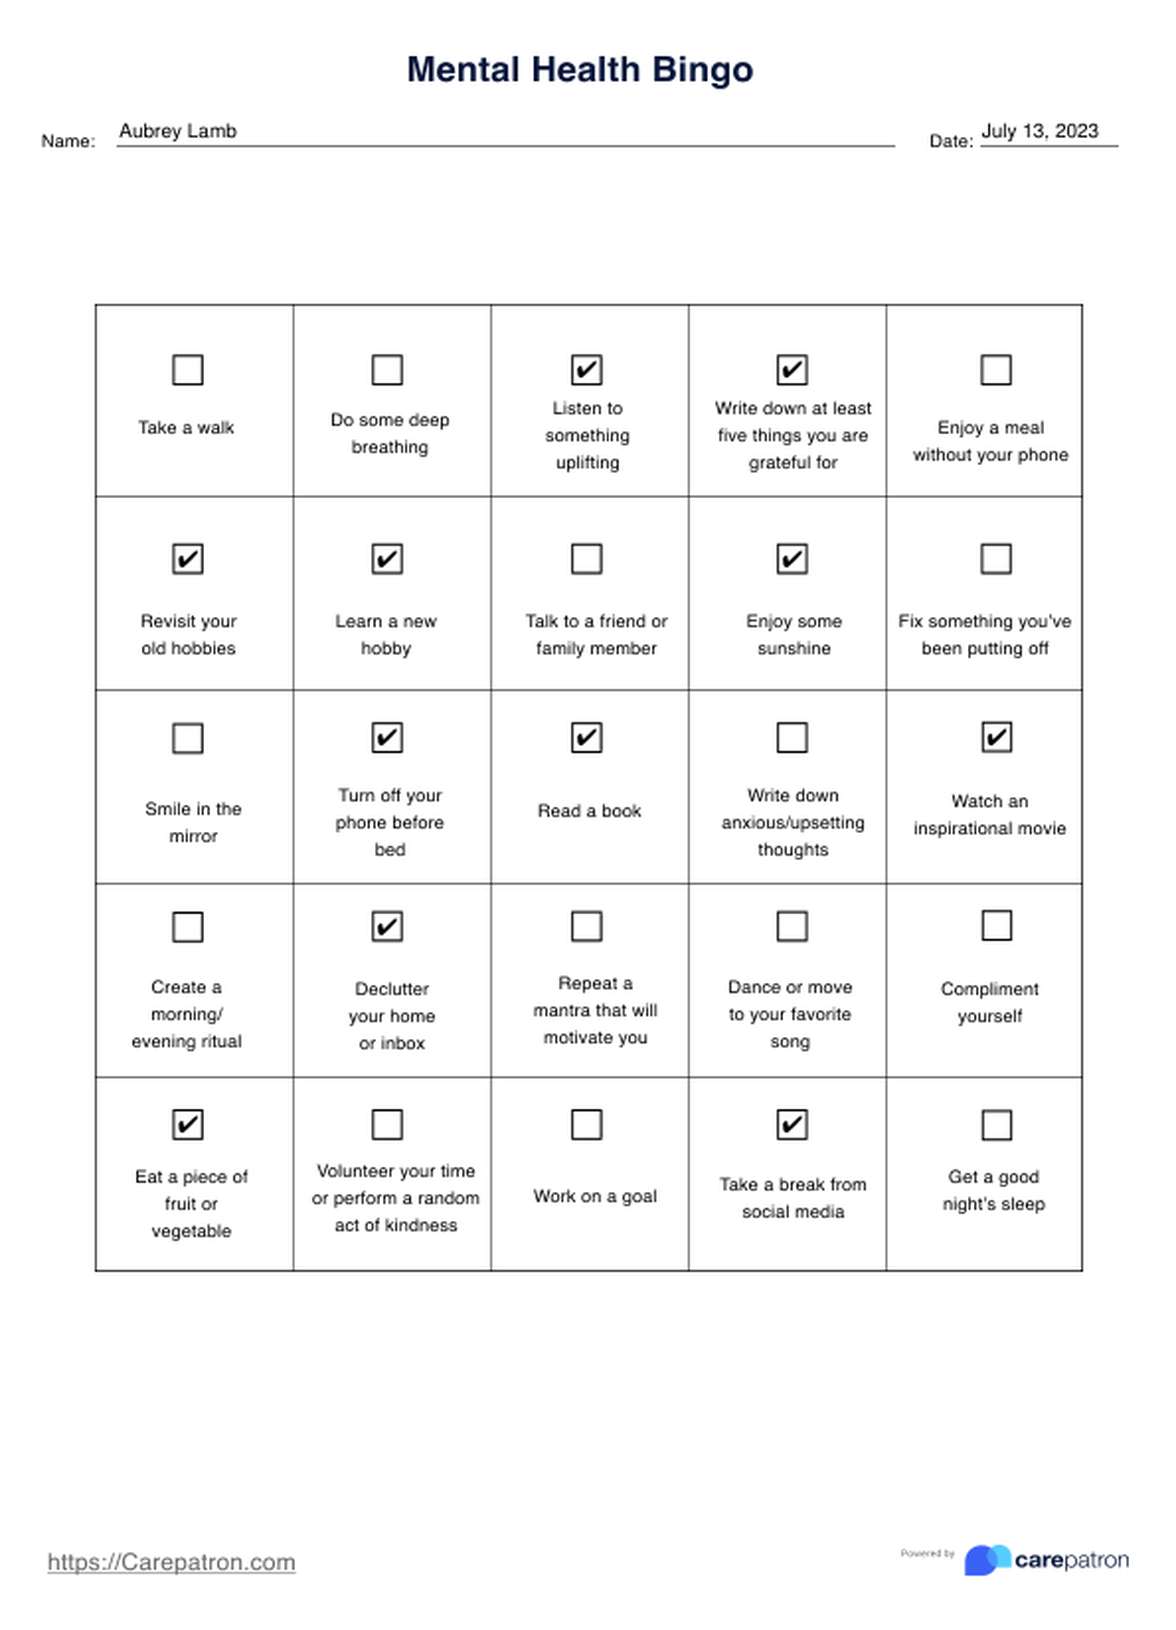 Mental Health Bingo PDF Example